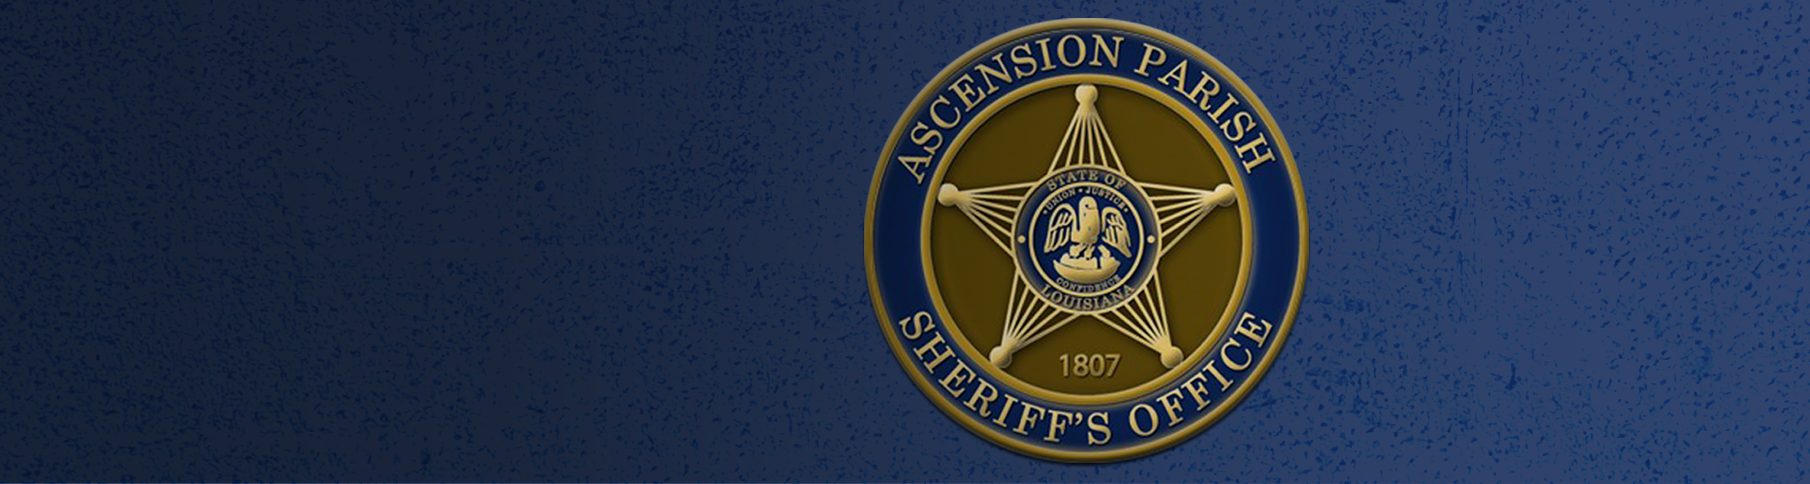 ascension parish sheriff sales